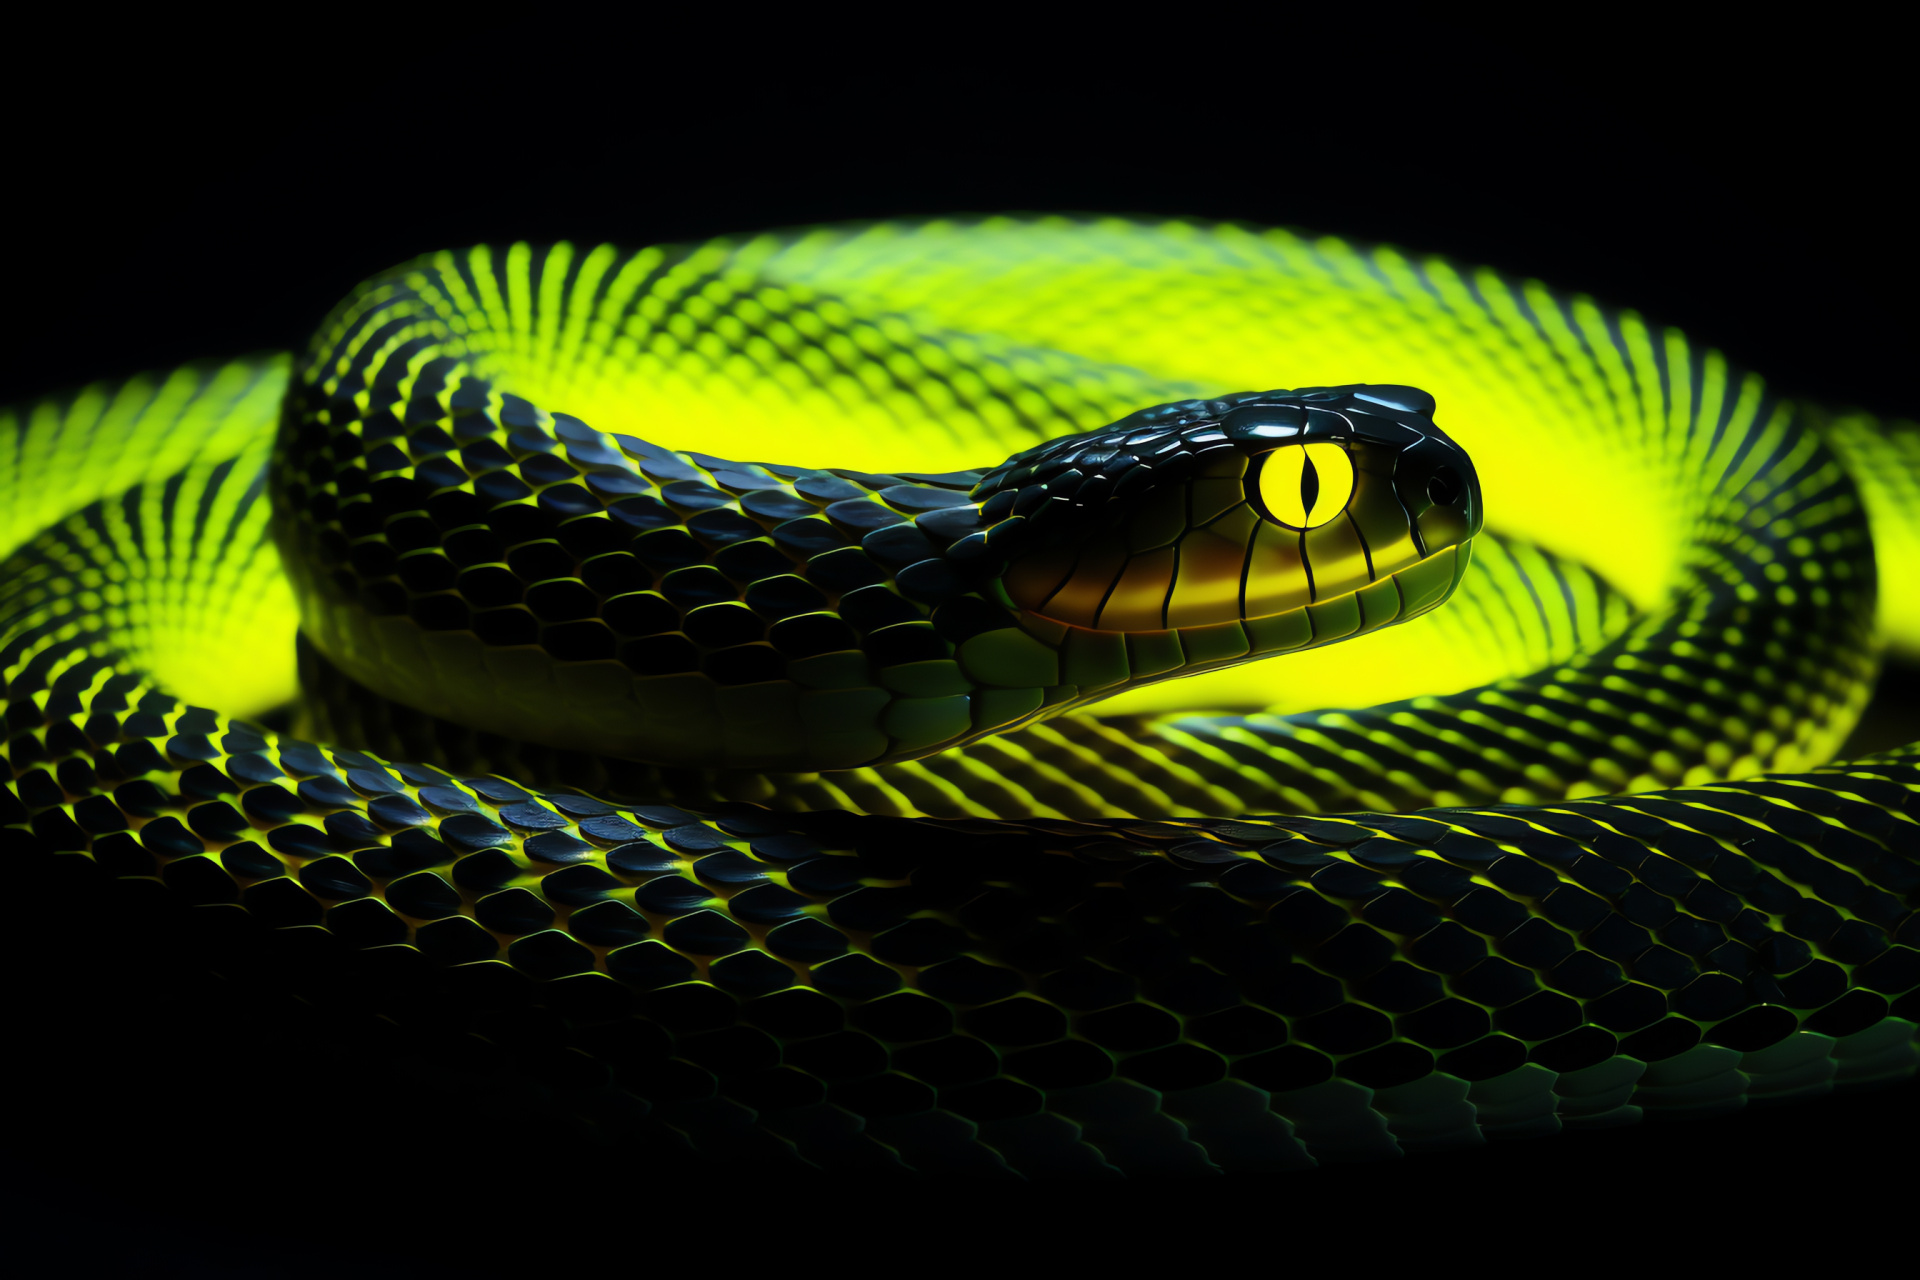 Radiant Neon Snake, Vibrant Reptilian, Black Contrast, Snake Charmers Dream, Bold Serpent, HD Desktop Image